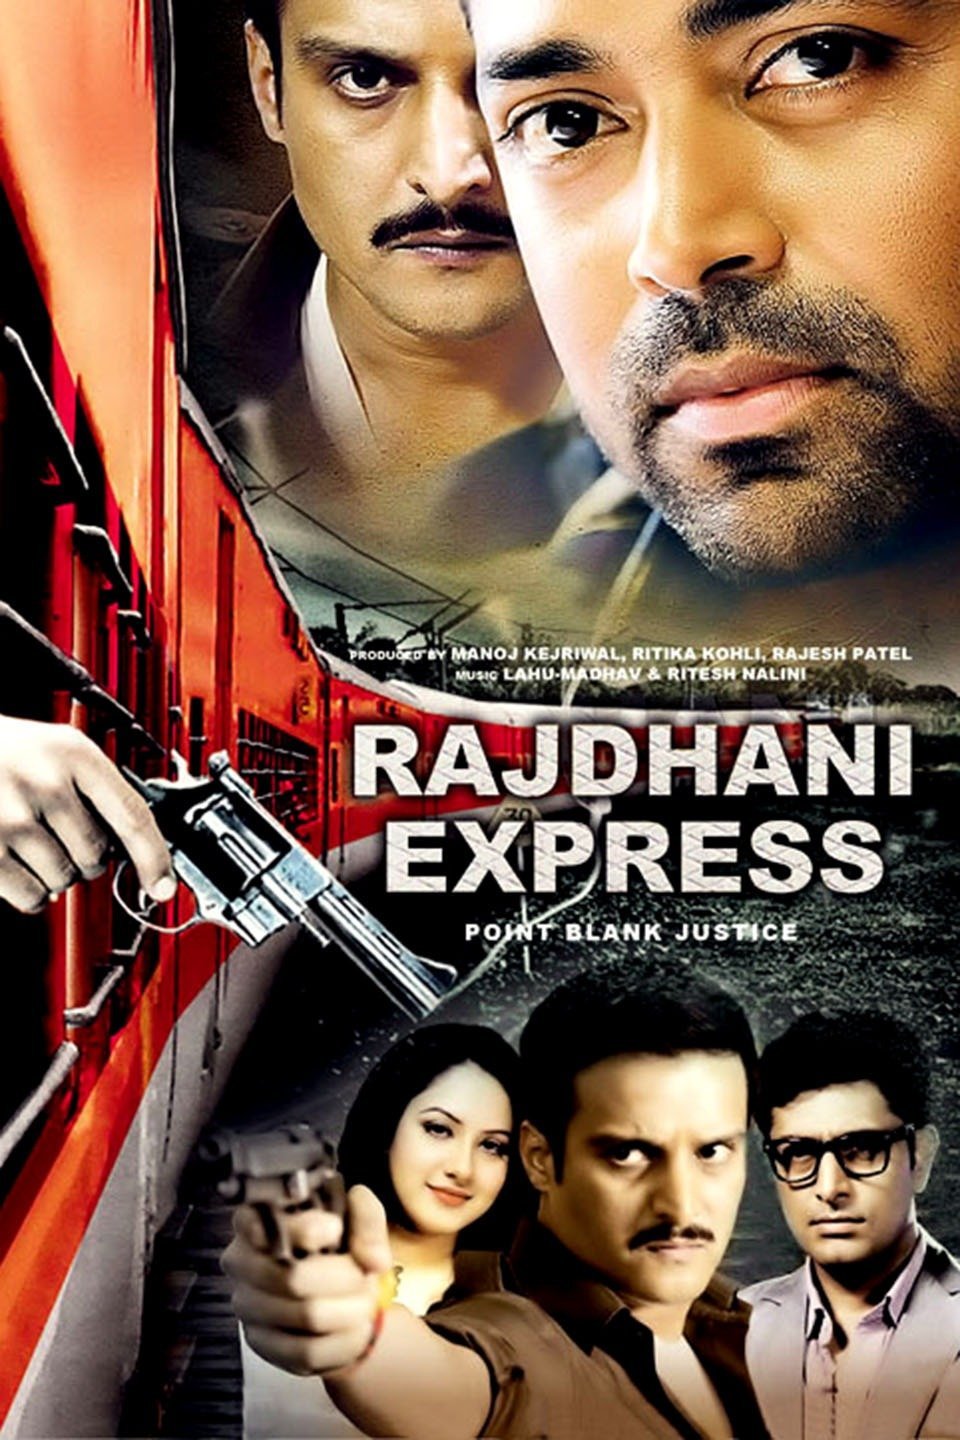 L'affiche originale du film Rajdhani Express en Hindi